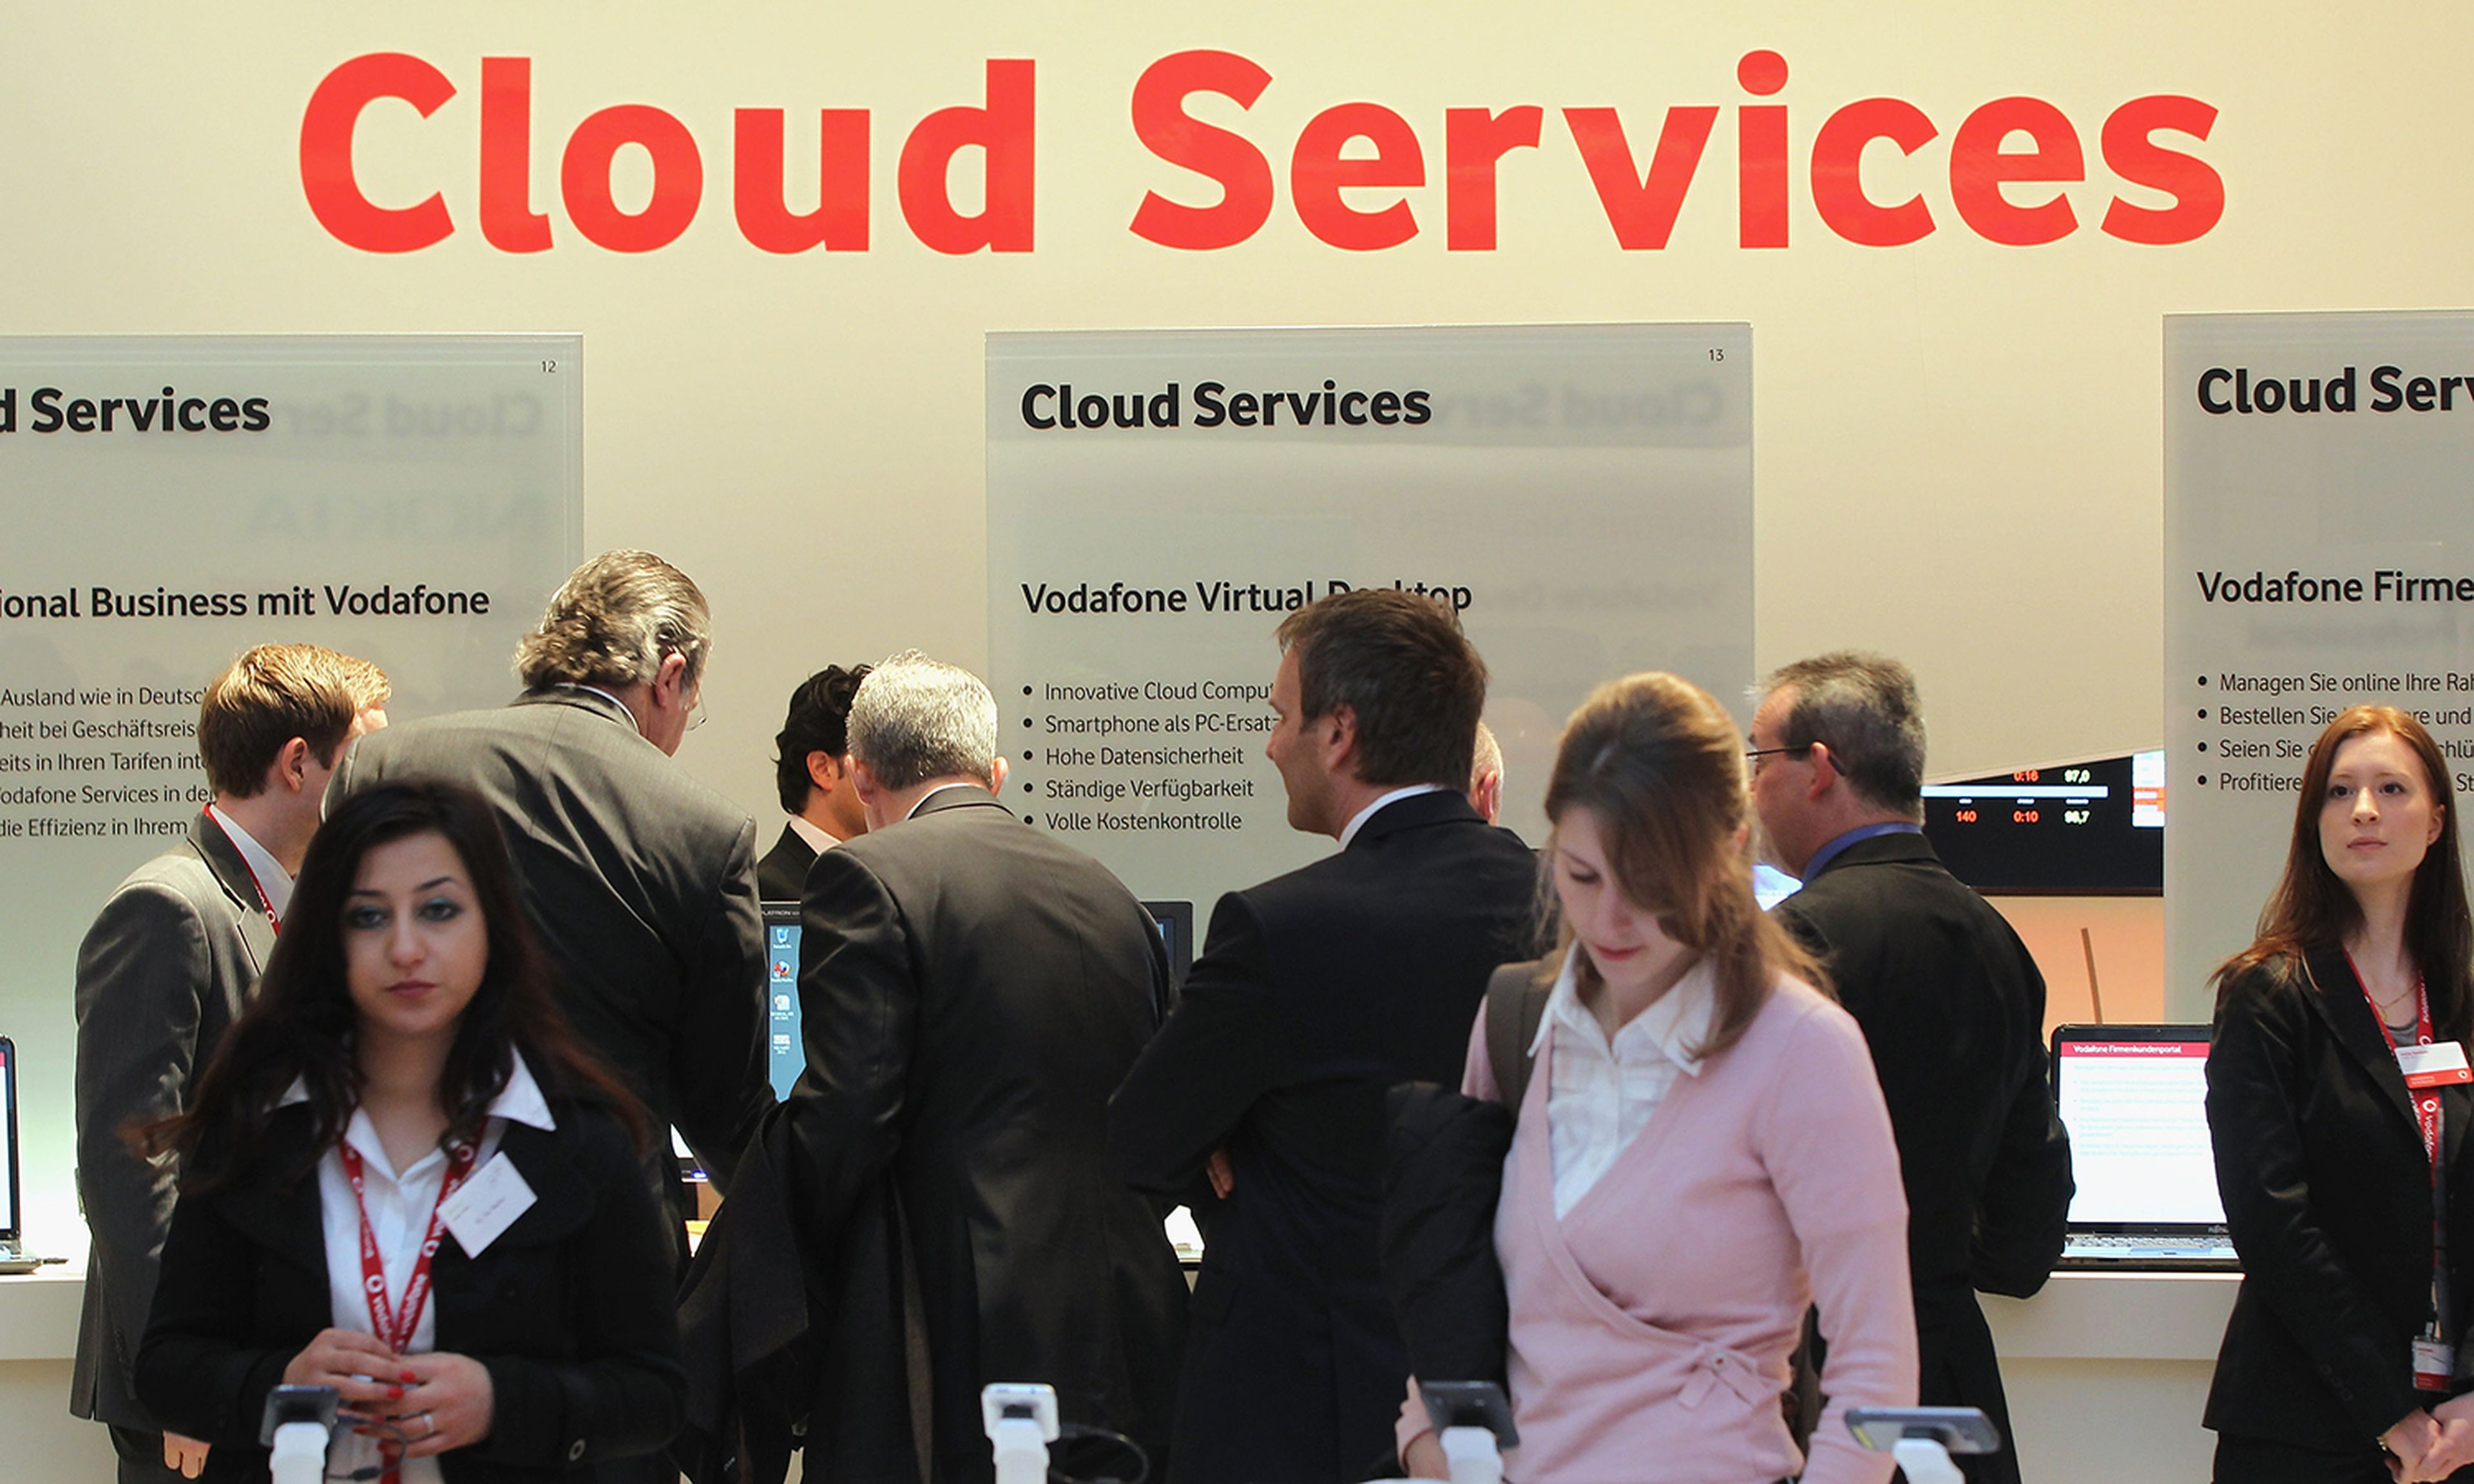 The cloud computing presentation at a trade fair